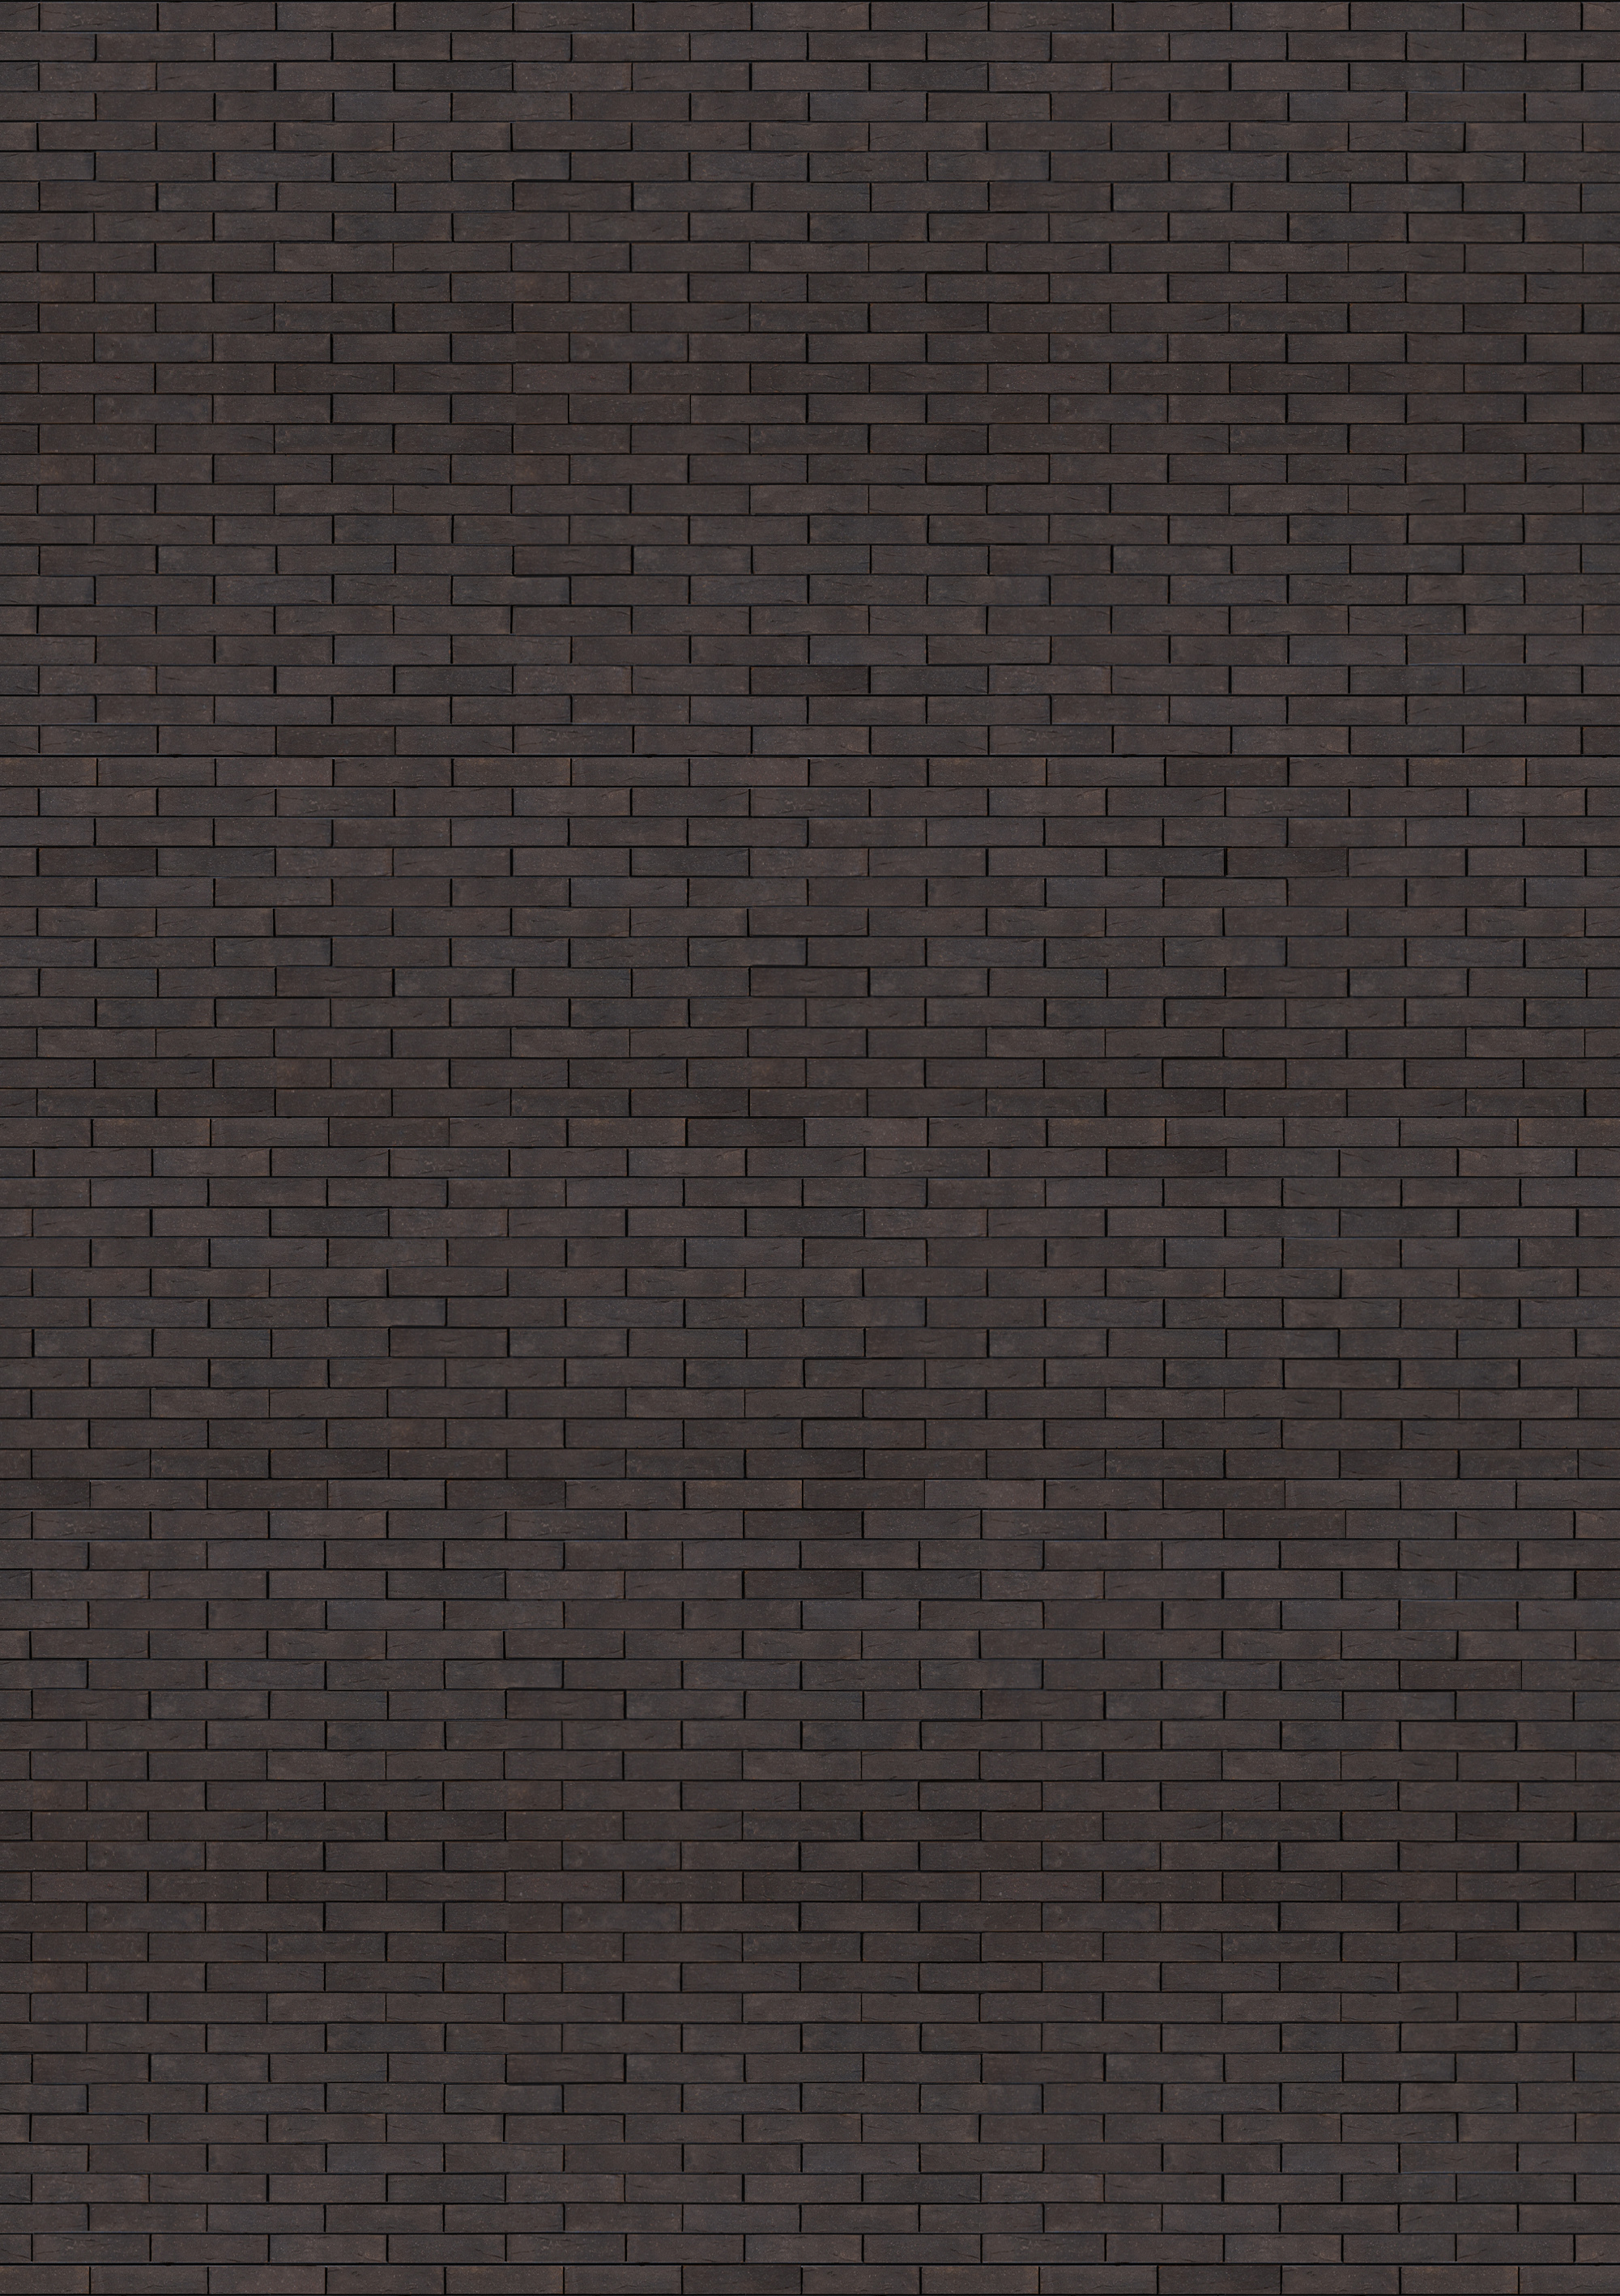 black brick